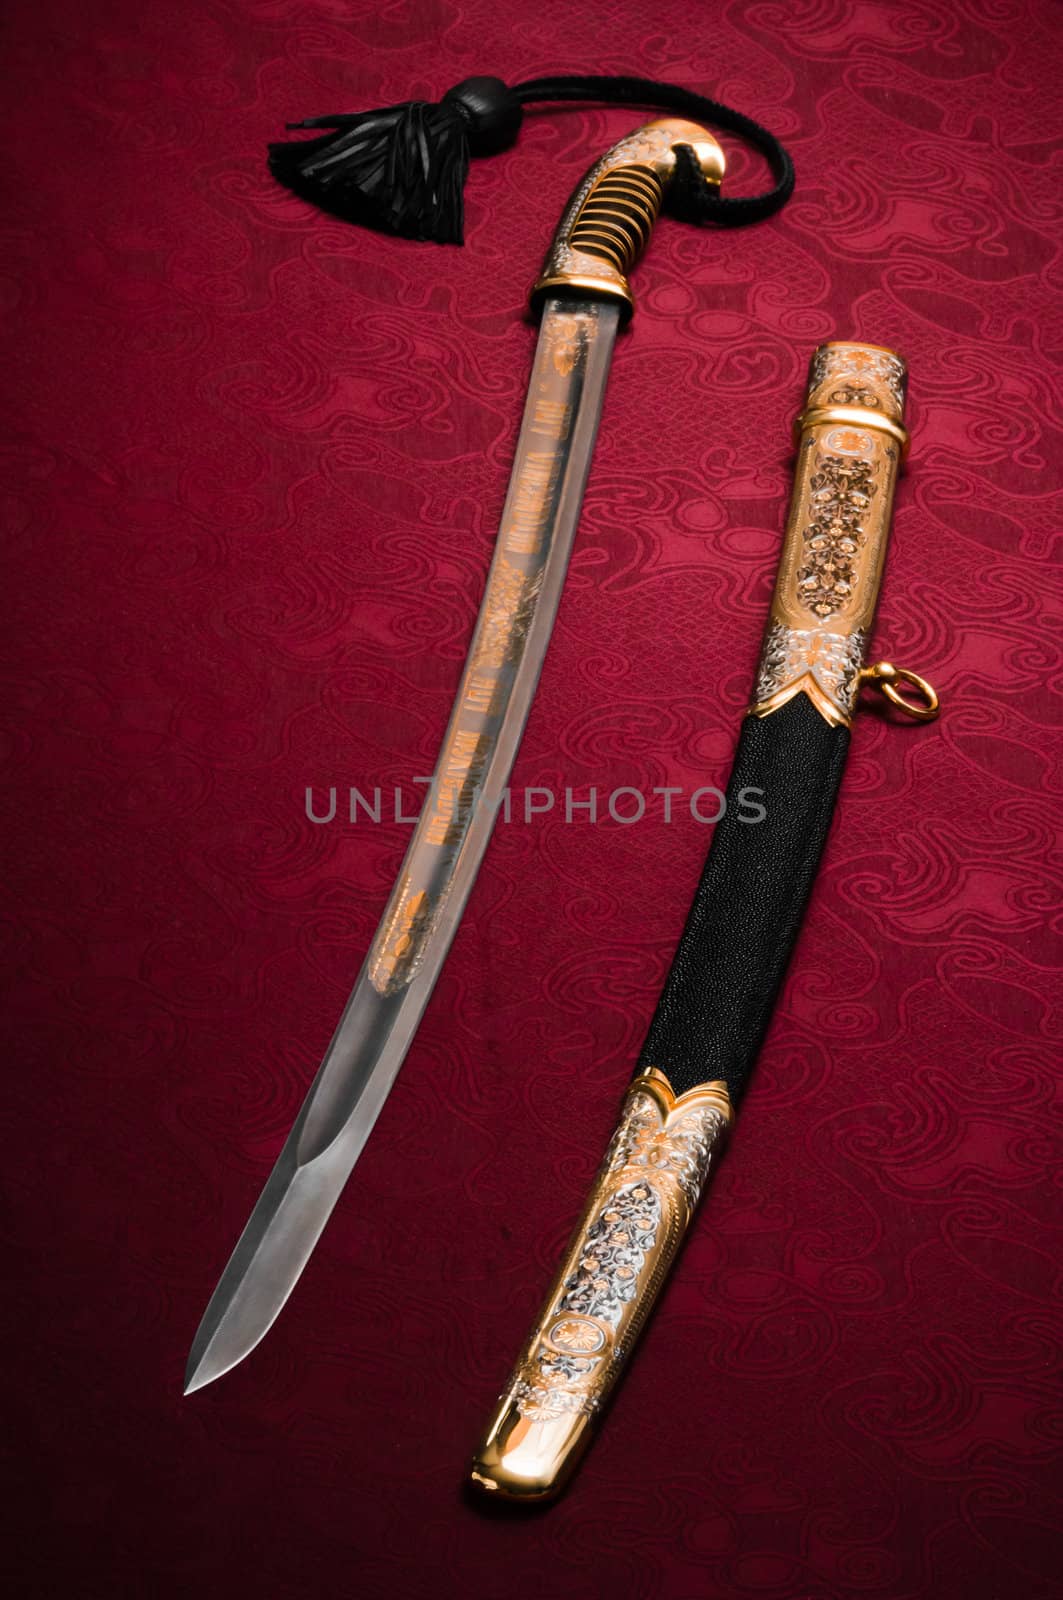 Ornated sword on red by dmitryelagin